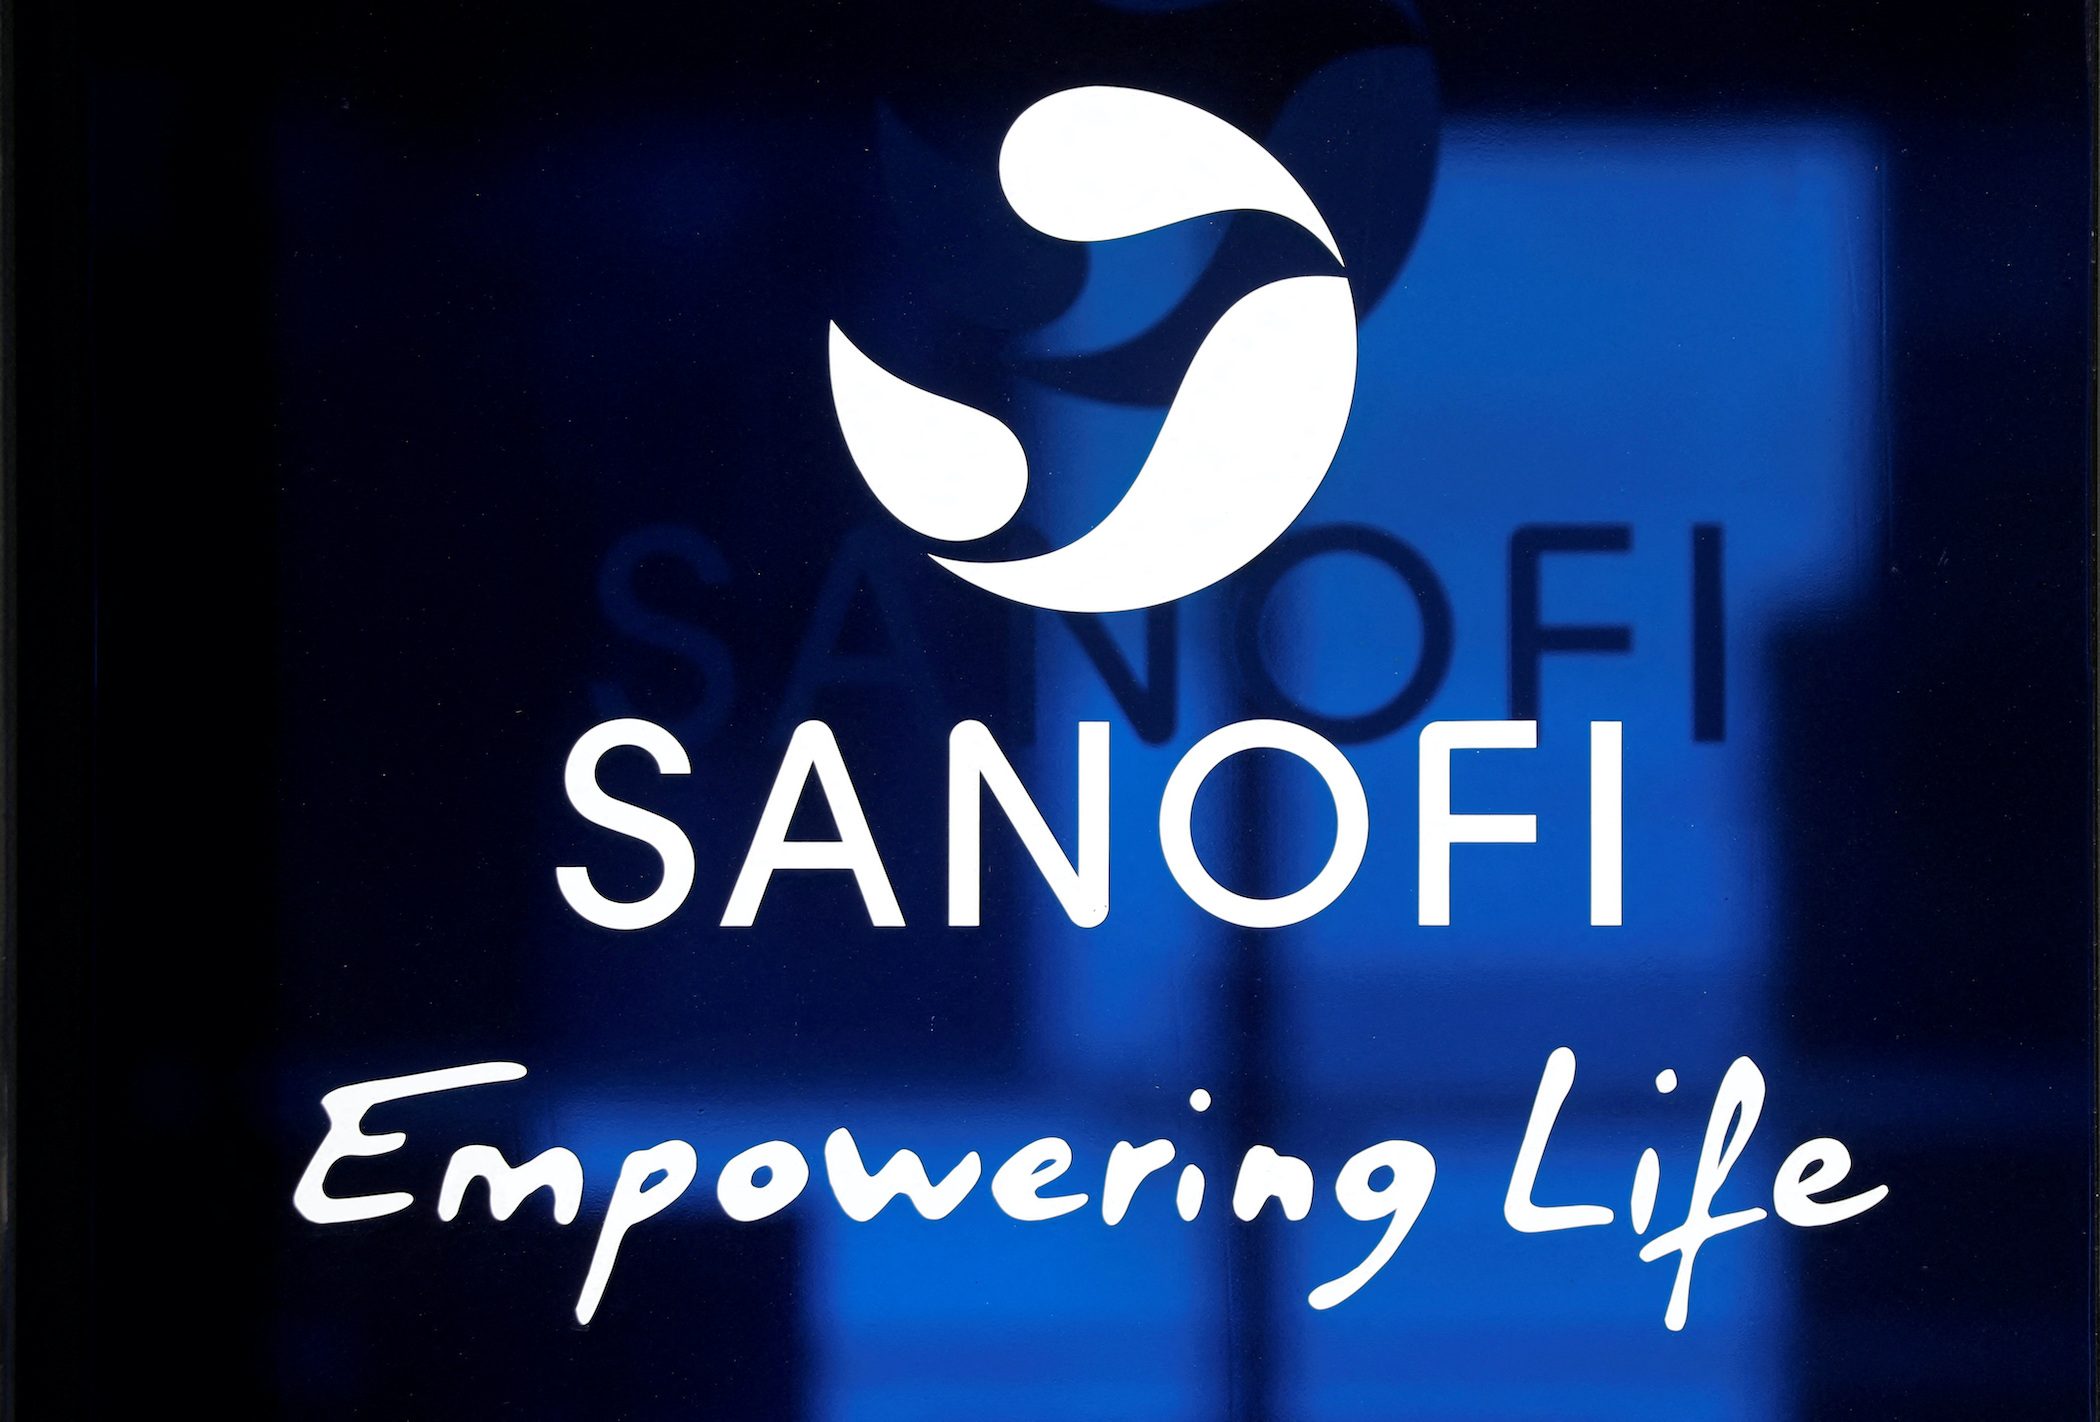 Meager medicine cabinet leaves Sanofi unloved